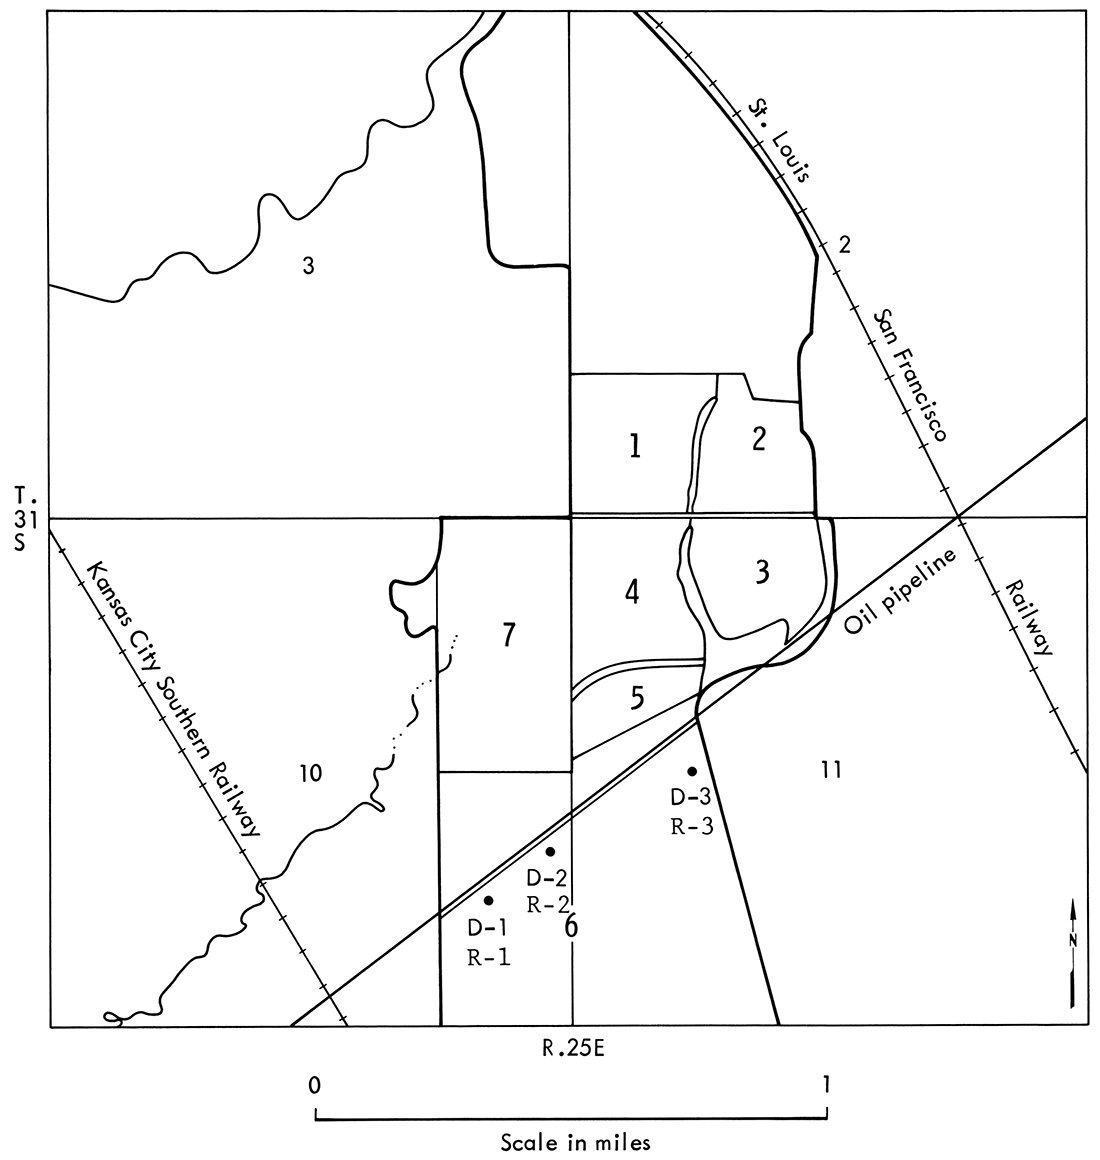 Map of location of coal-sampling sites.